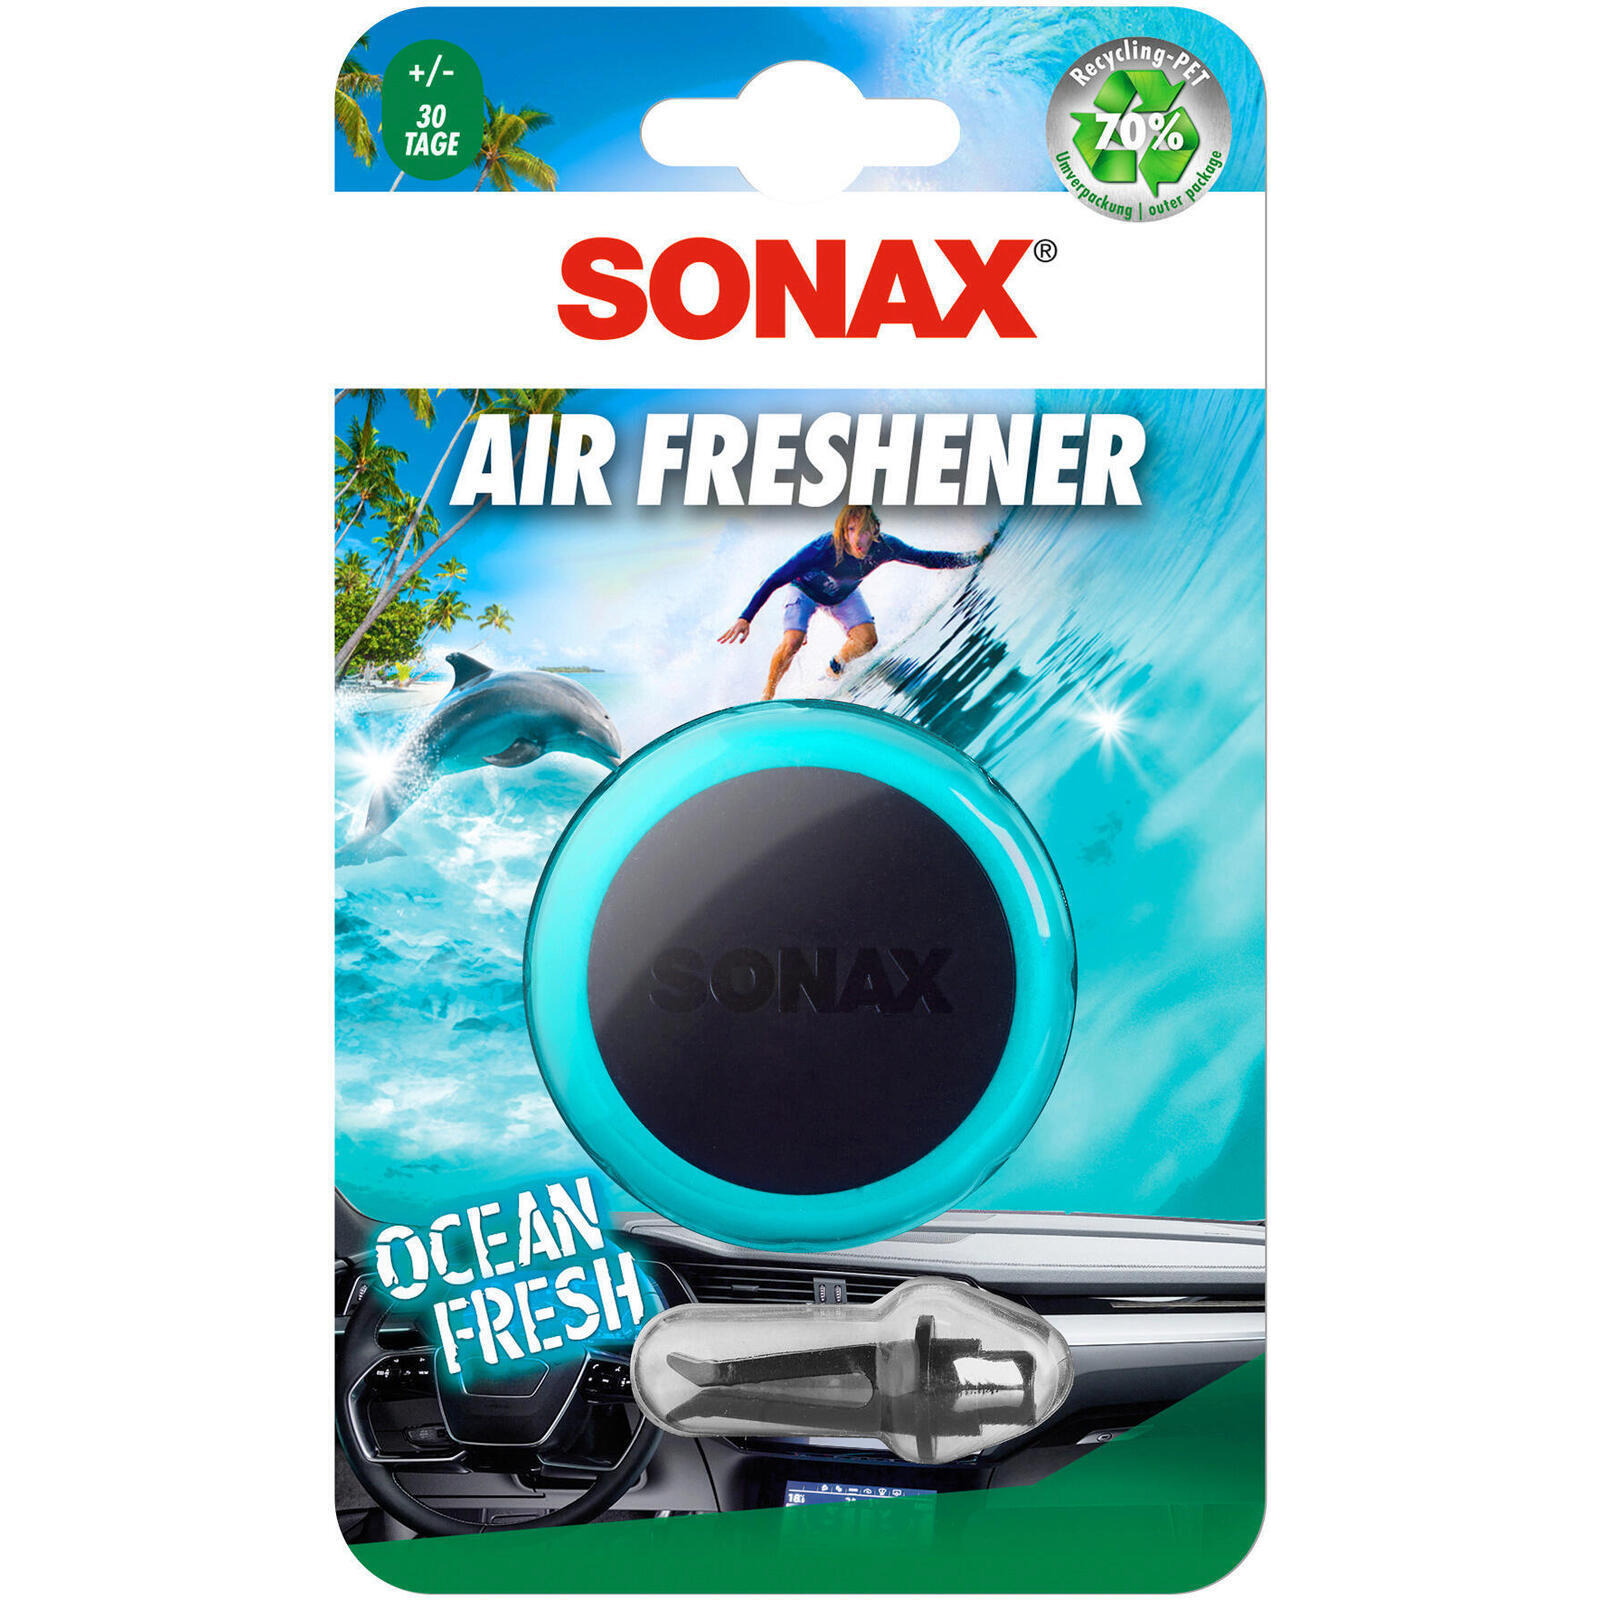 SONAX Air Freshener Air Freshener Ocean-fresh